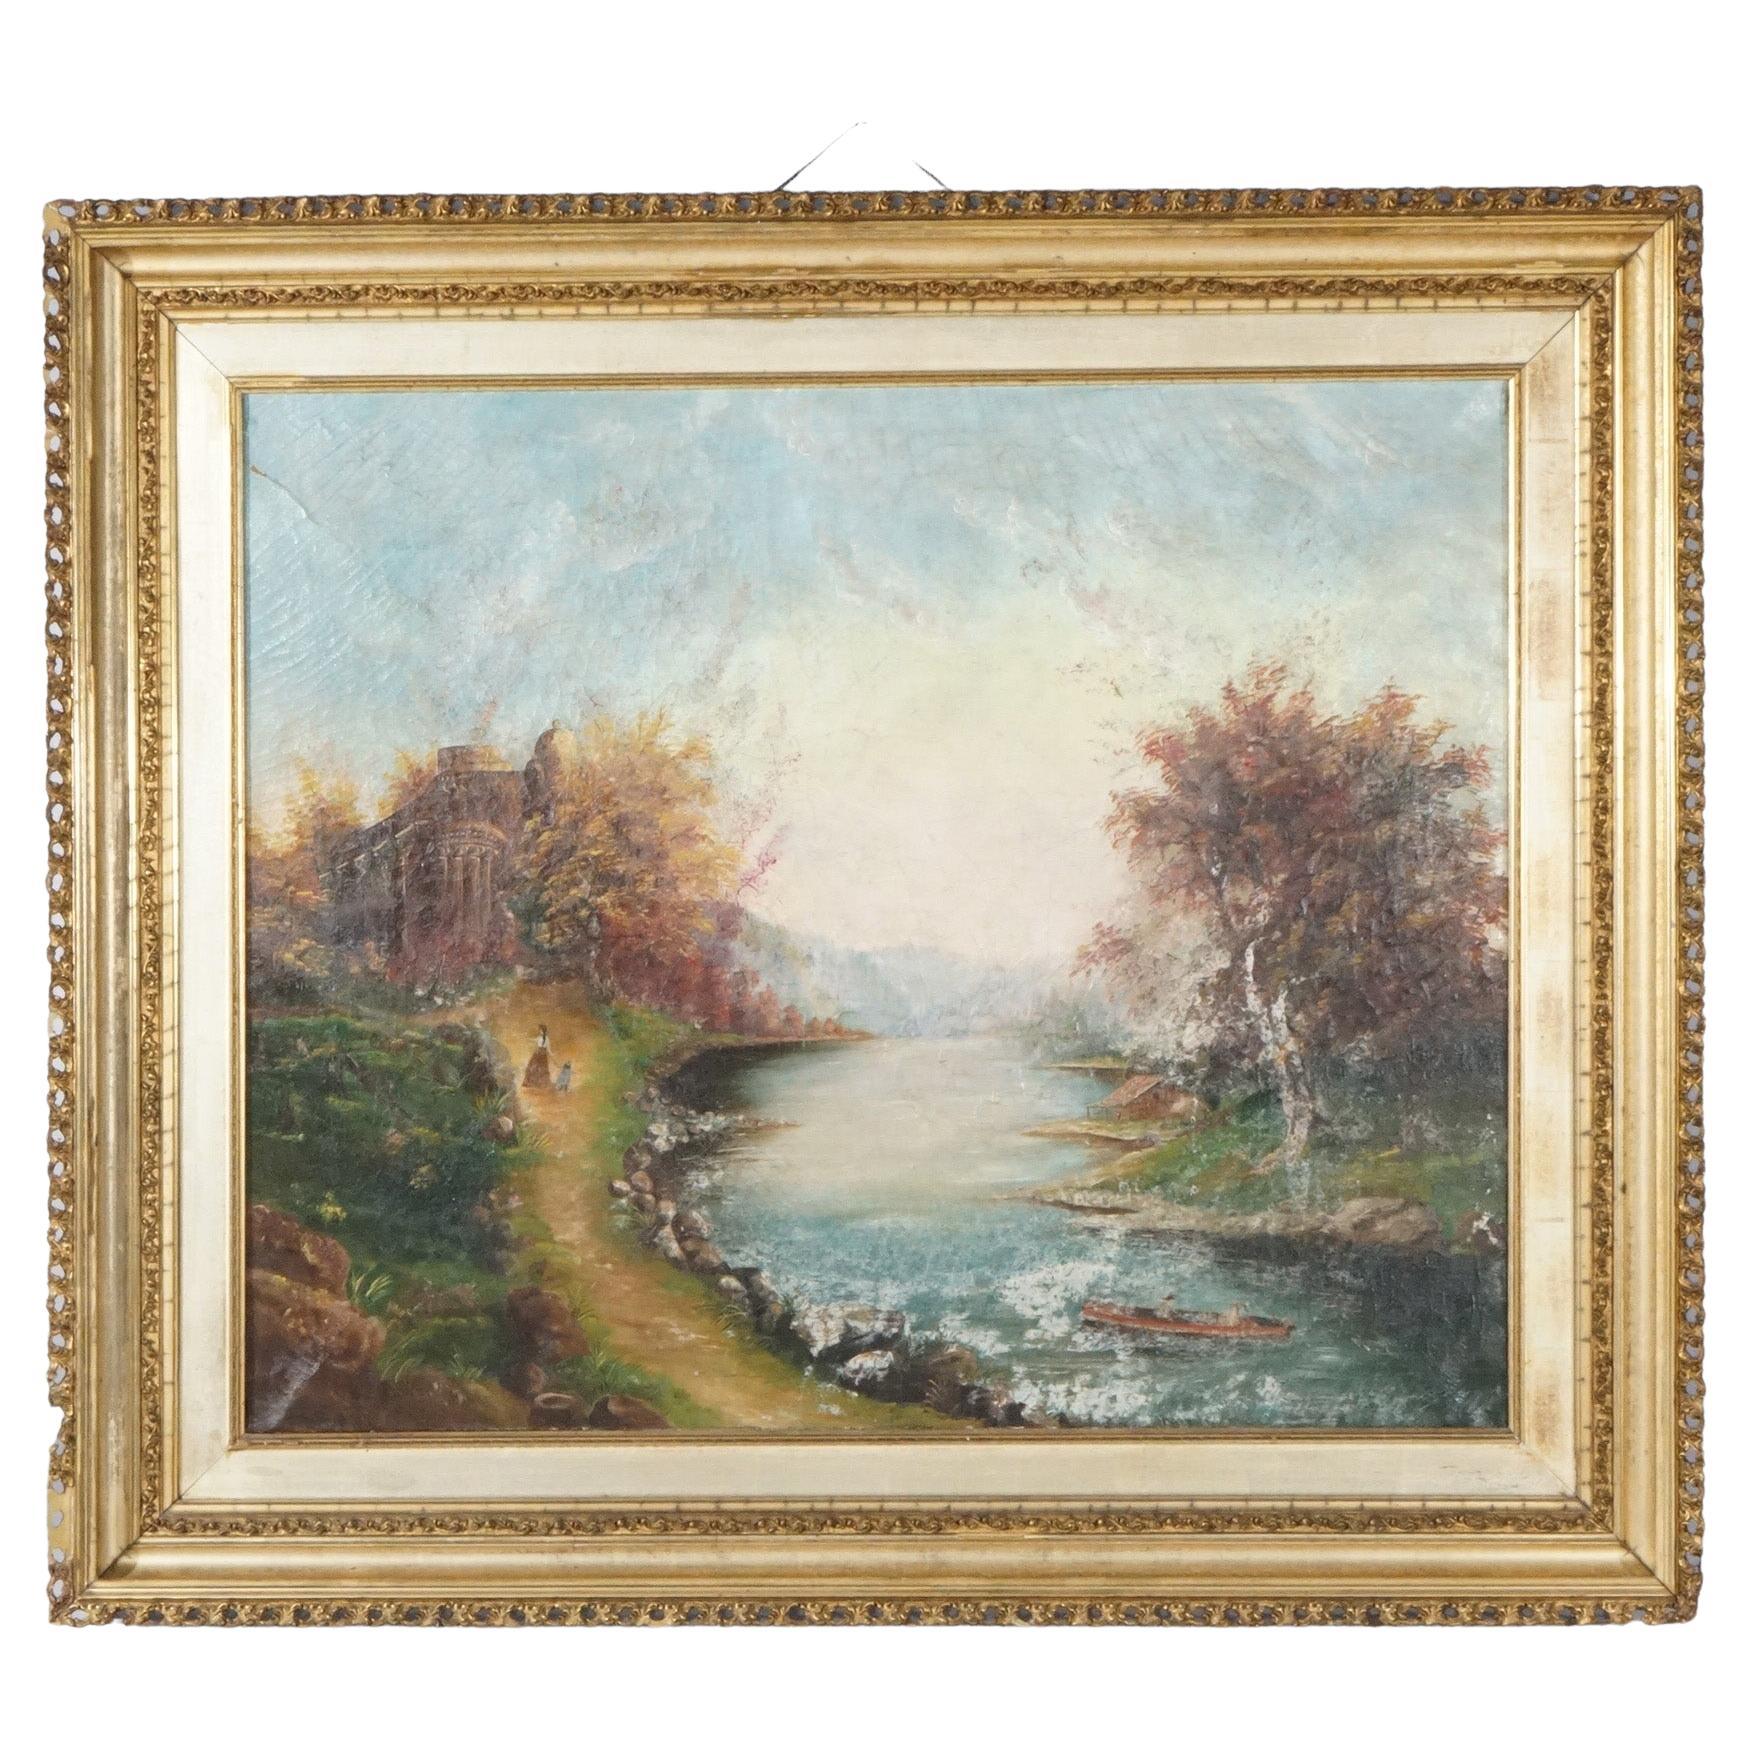 Antique Hudson River School Landscape Oil on Canvas Painting, River Scene, 19thC